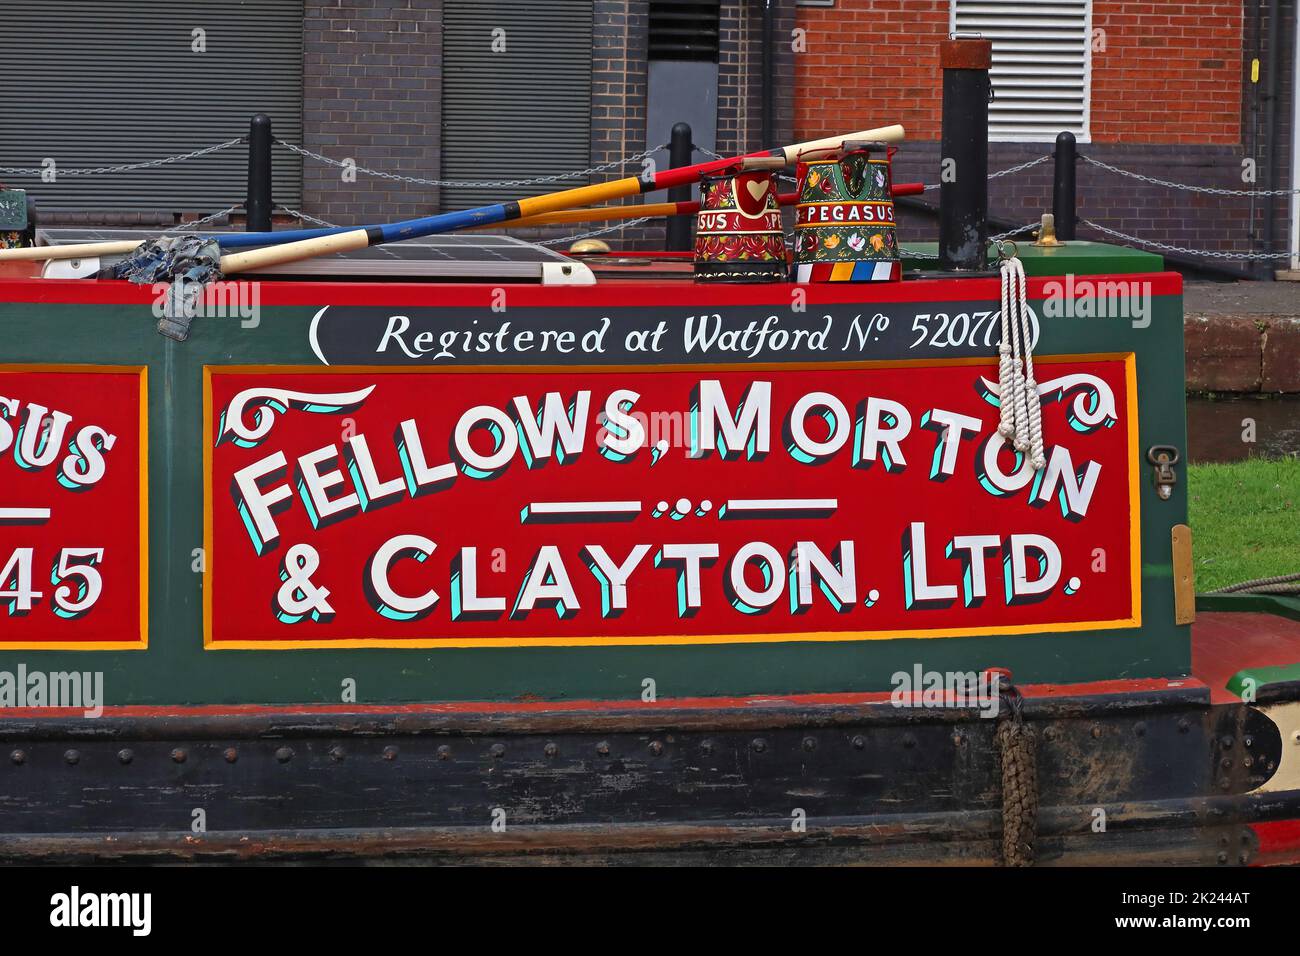 Pegasus, No 245, Fellows Morton & Clayton Ltd, canal barge, registered at Watford, No 52071, at Ellesmere Port, Cheshire, Bridgewater Canal Stock Photo